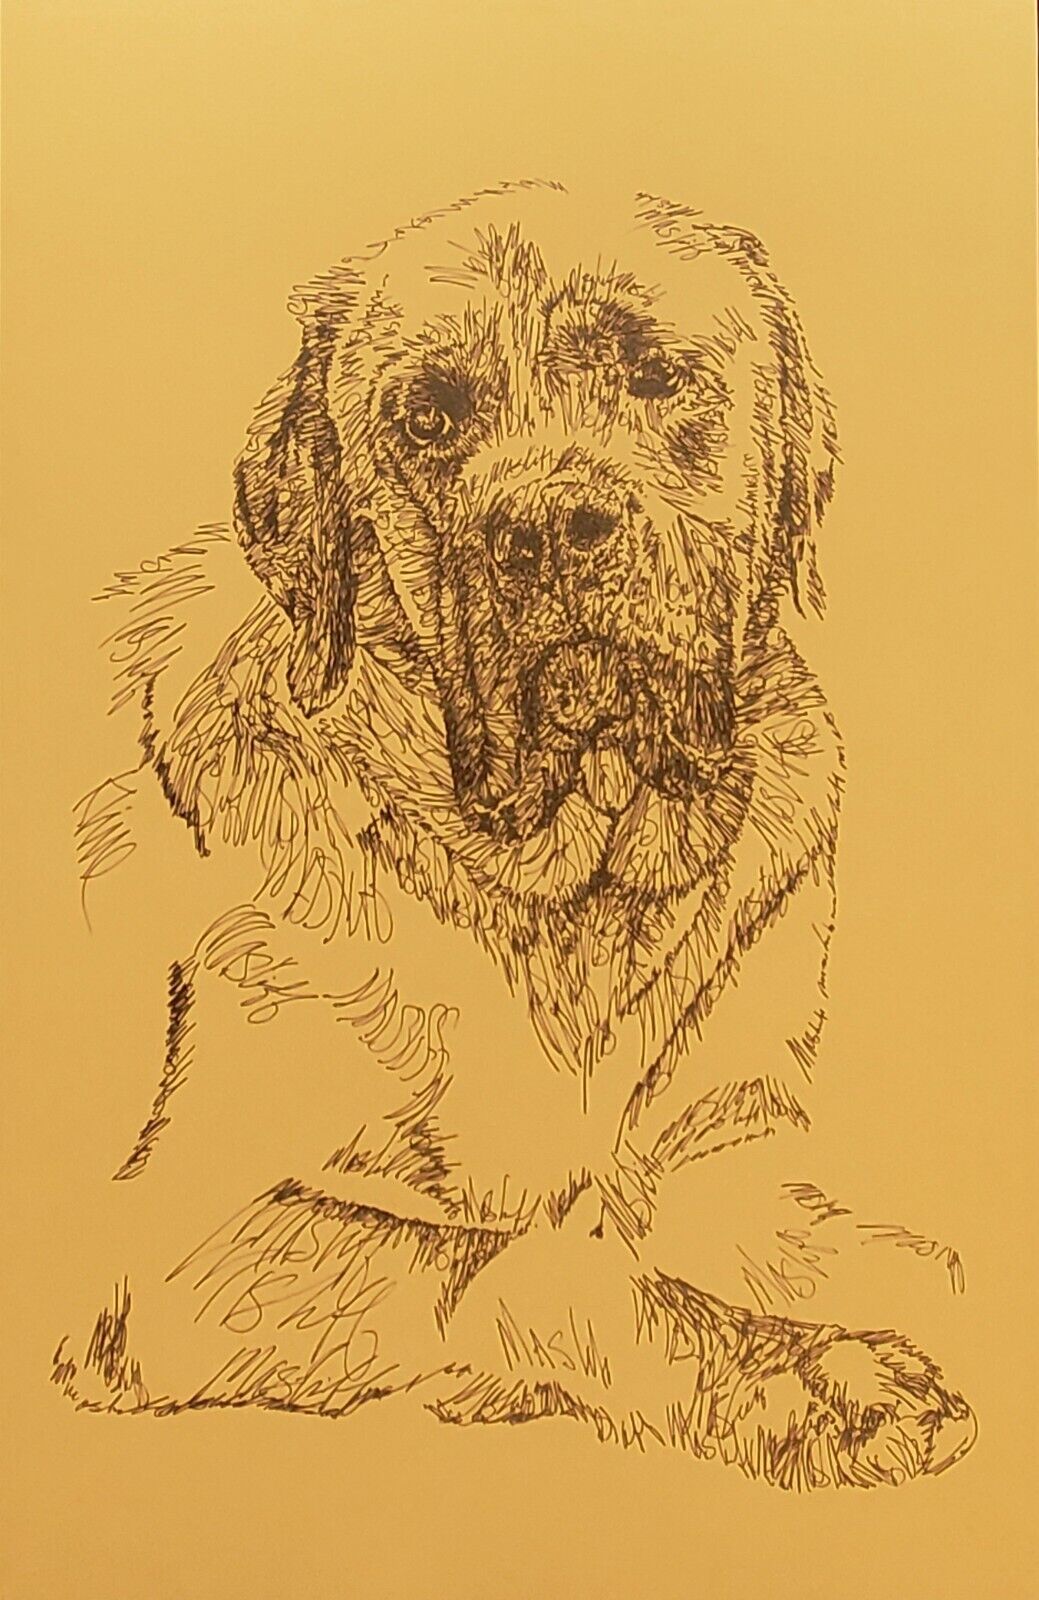 ENGLISH MASTIFF DOG ART PRINT #82 Stephen Kline will add your dogs name free.